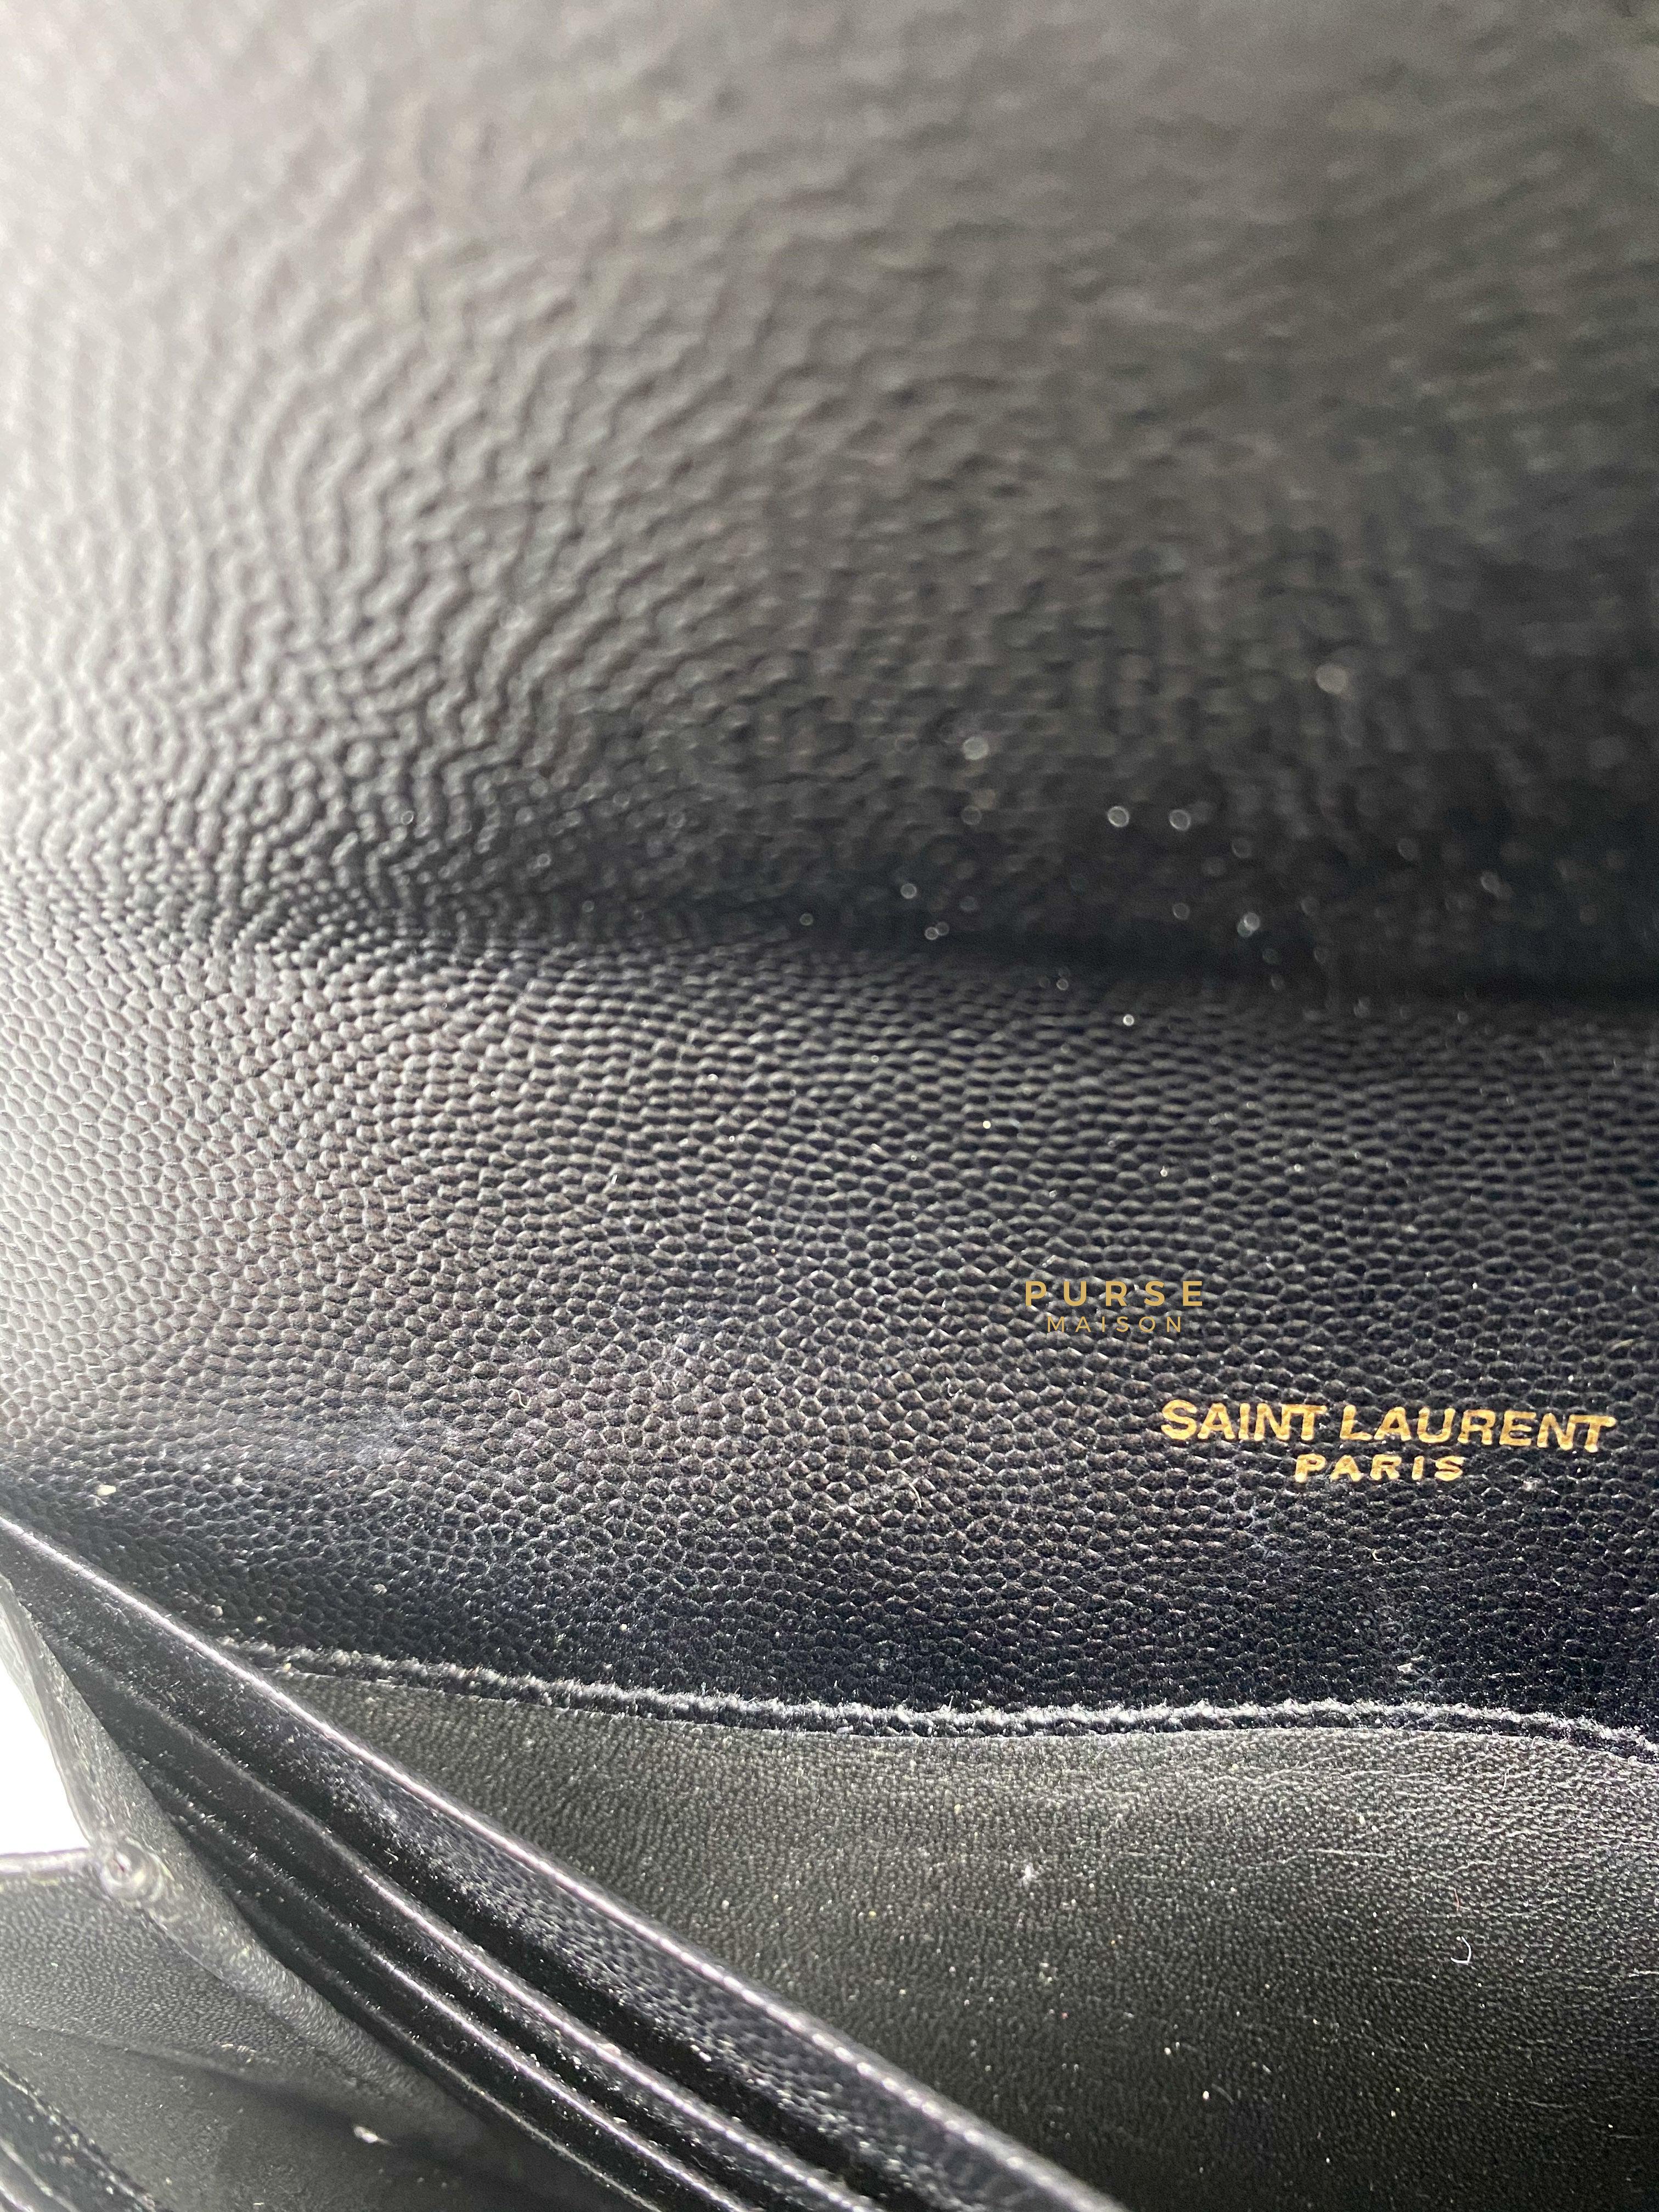 YSL Flap Long Wallet in Black Monogram Grain Leather | Purse Maison Luxury Bags Shop